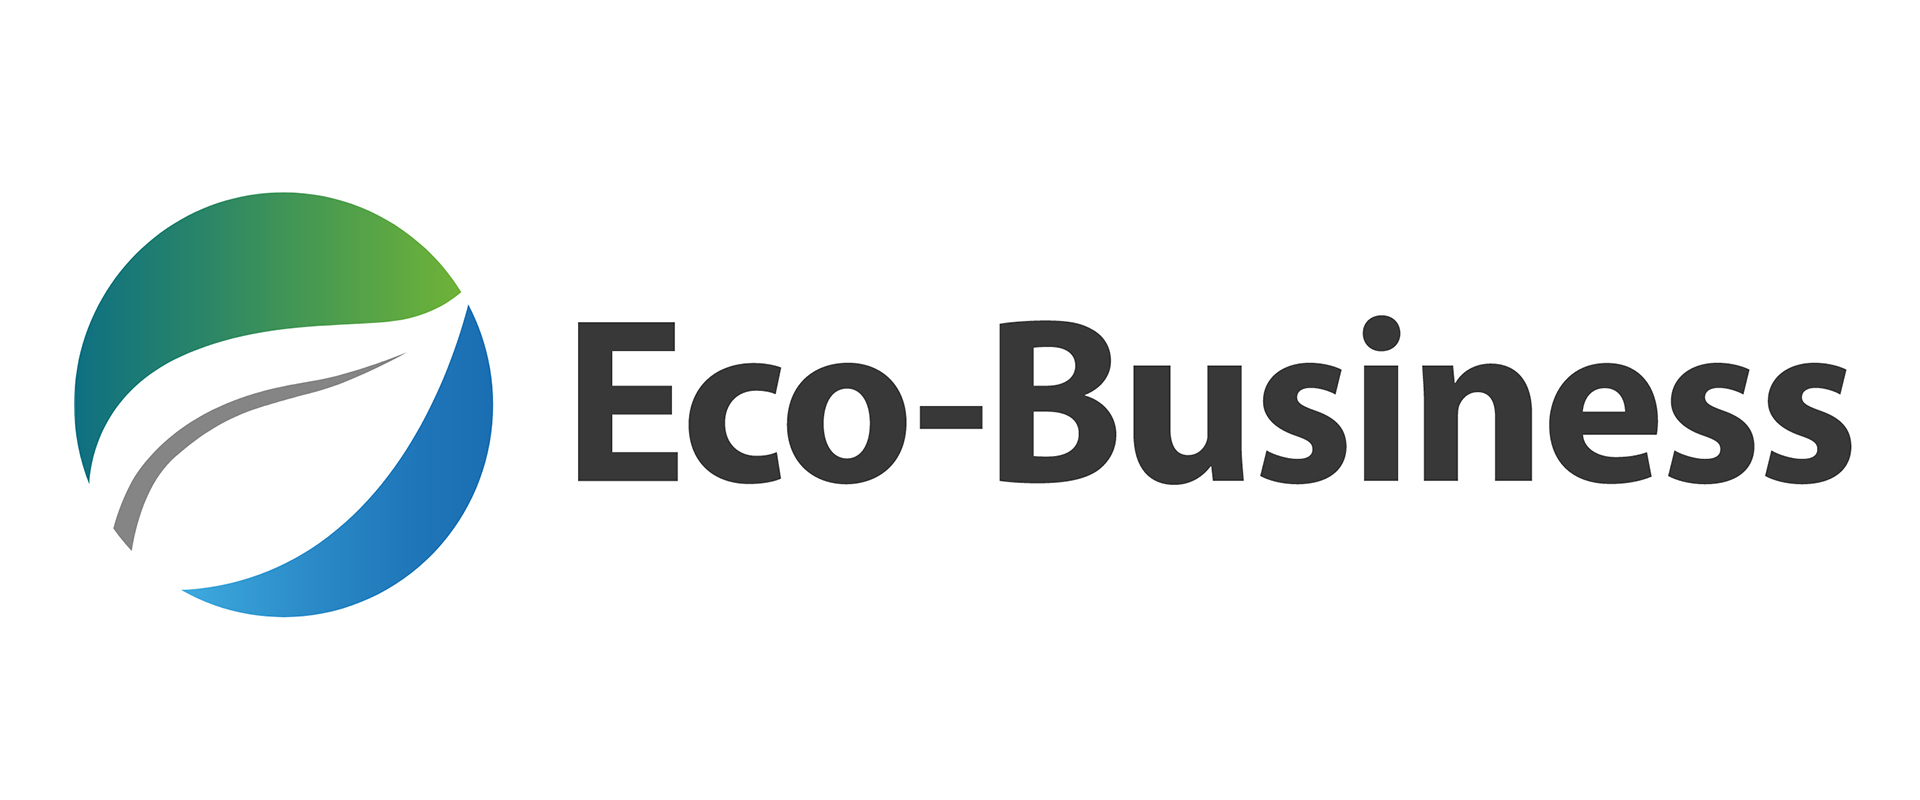 eco-business